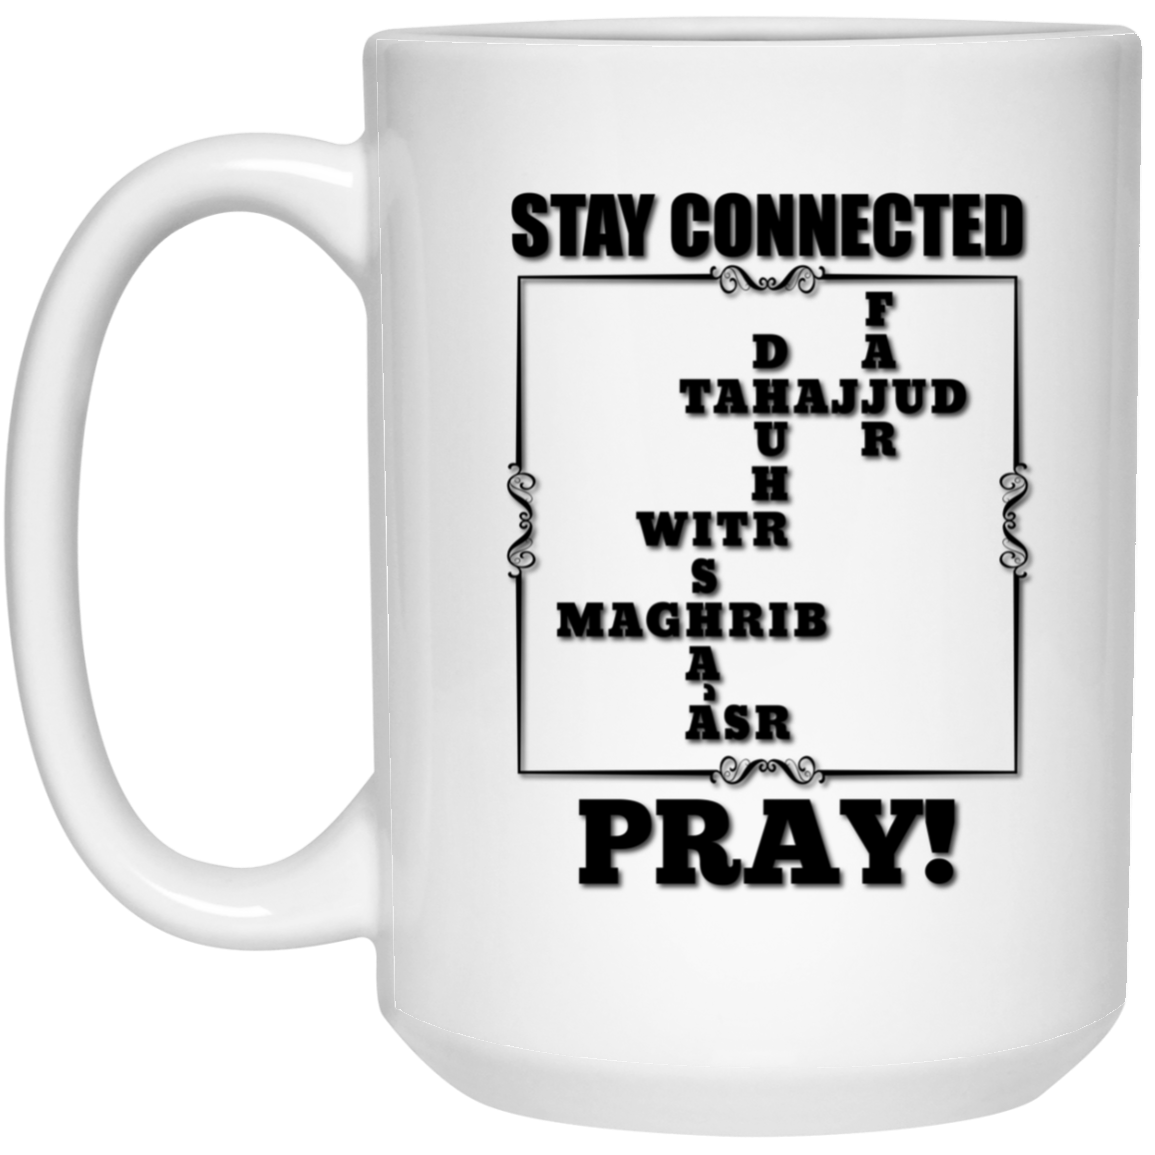 STAY CONNECTED PRAY! PRAYER NAMES 15 oz. White Mug